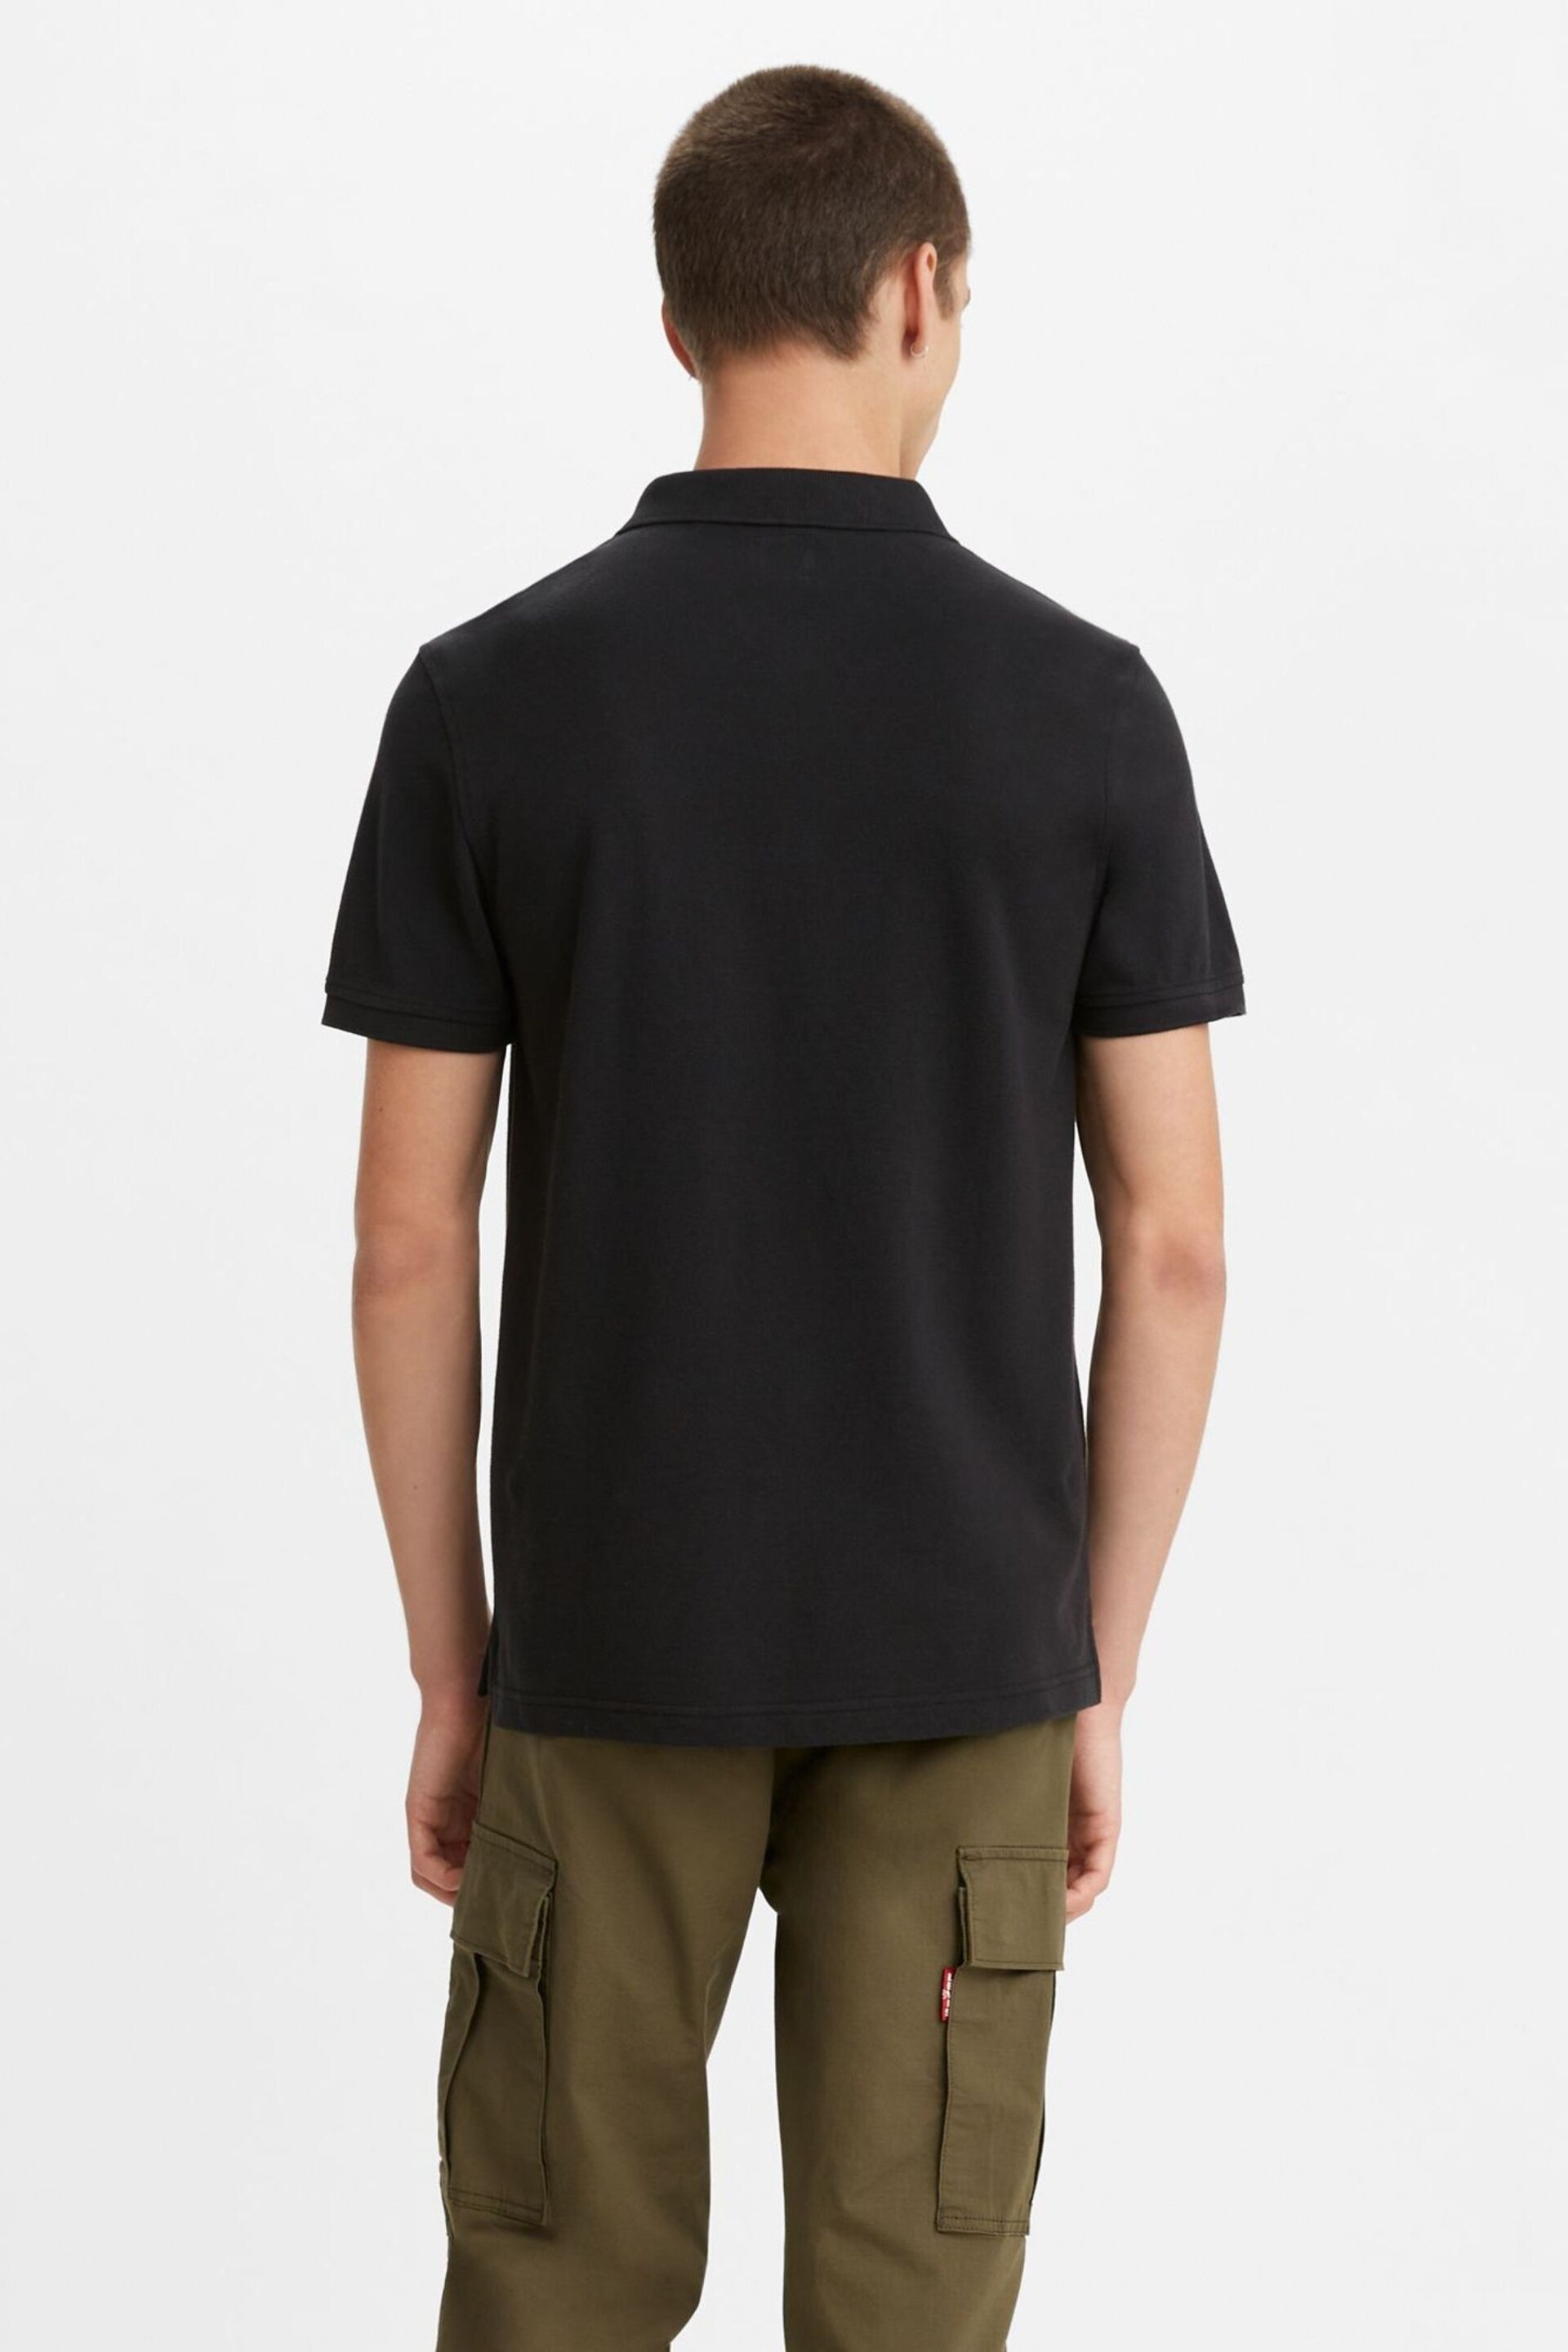 Levi's® Black Housemark Polo Shirt - Image 2 of 2